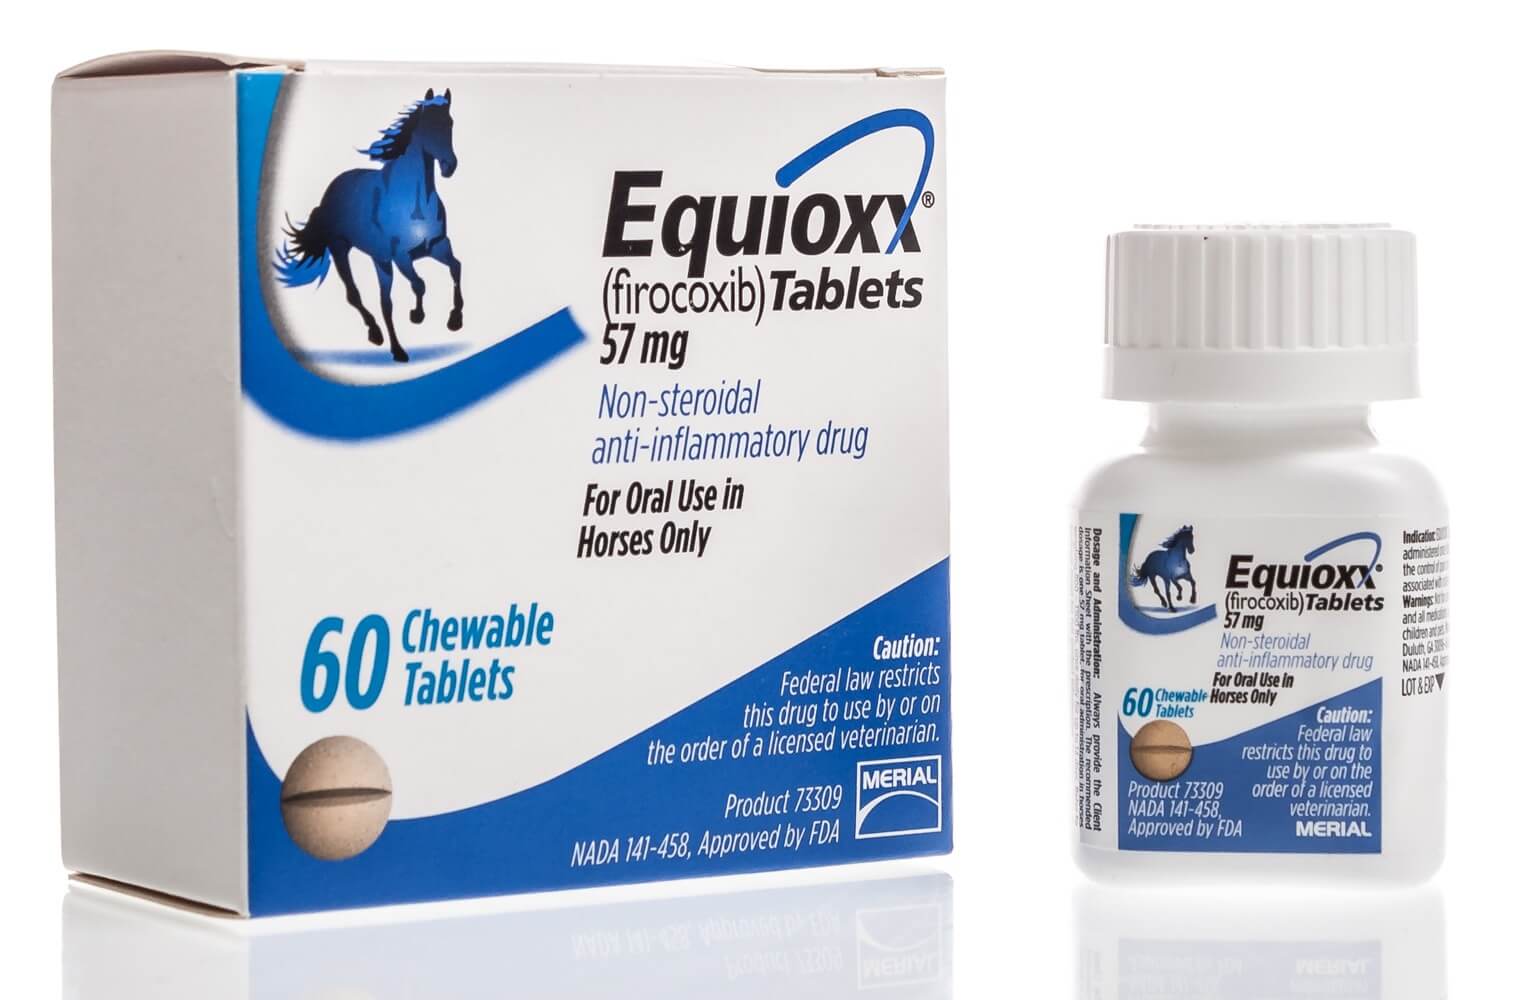 equioxx-firocoxib-tablets-santa-cruz-animal-health